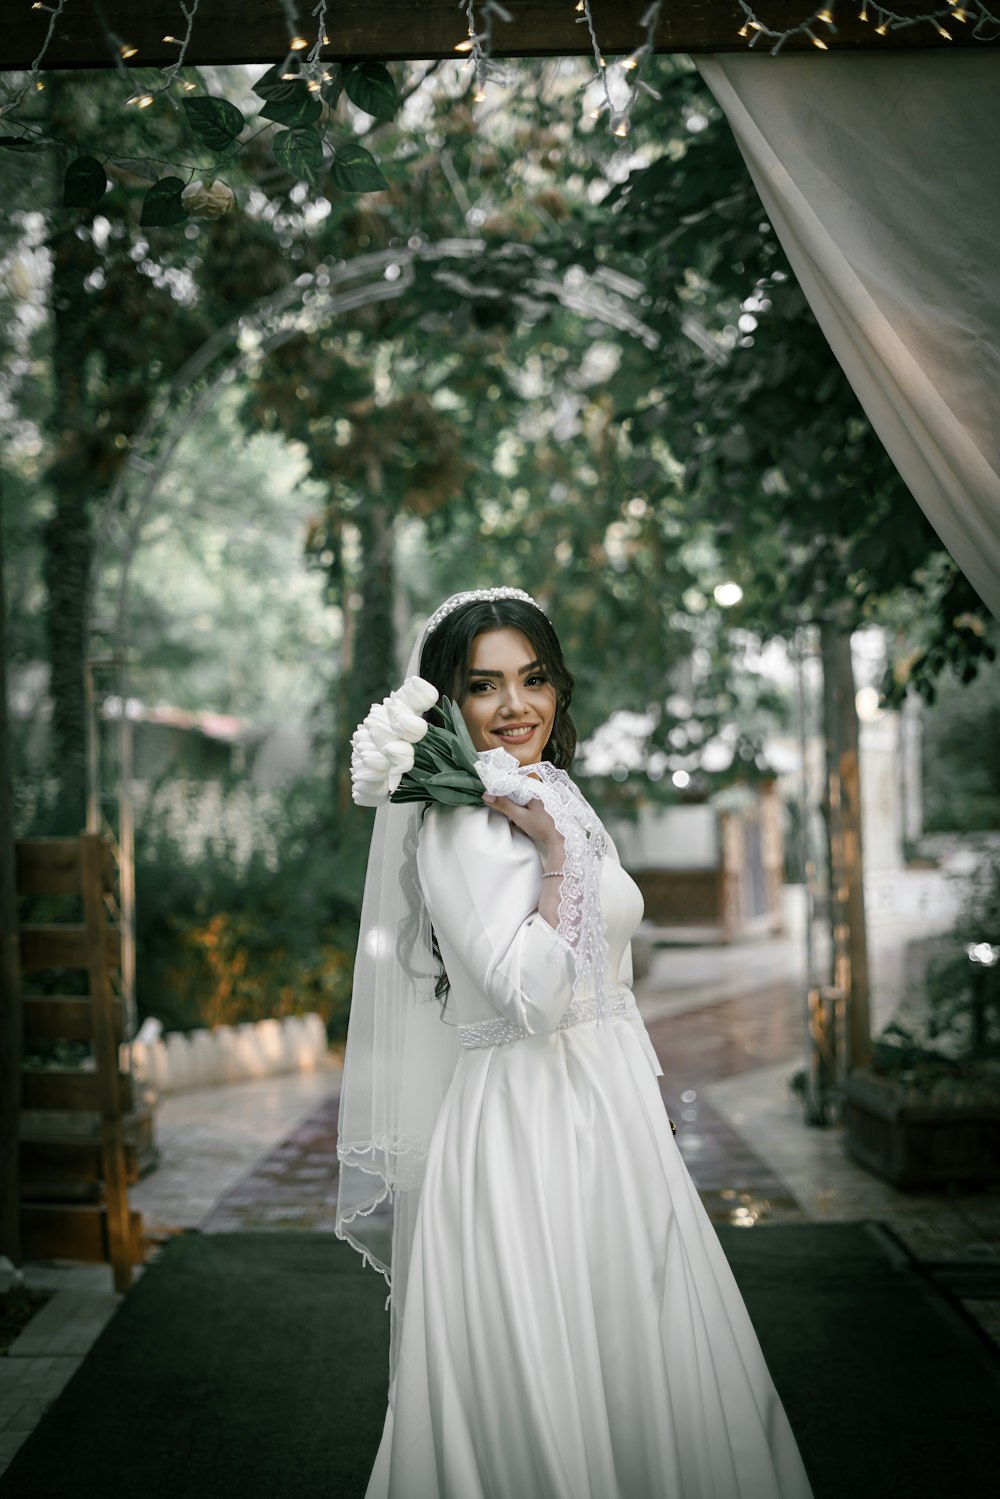 a woman in a wedding dress holding a flower